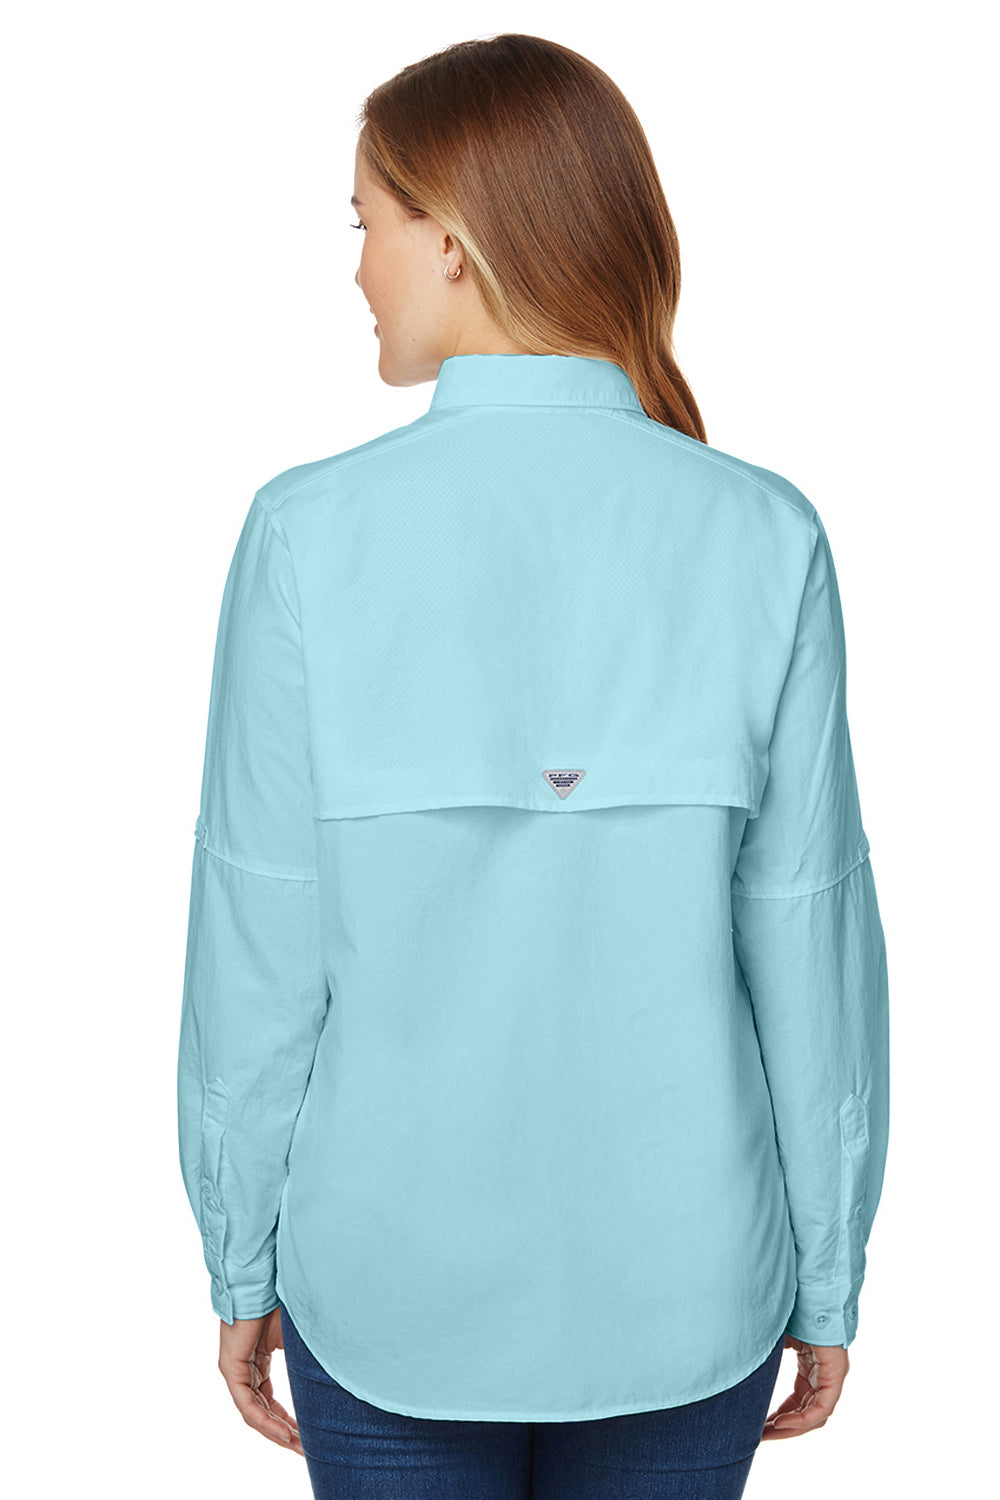 Columbia 7314 Womens Bahama Moisture Wicking Long Sleeve Button Down Shirt w/ Double Pockets Clear Blue Back